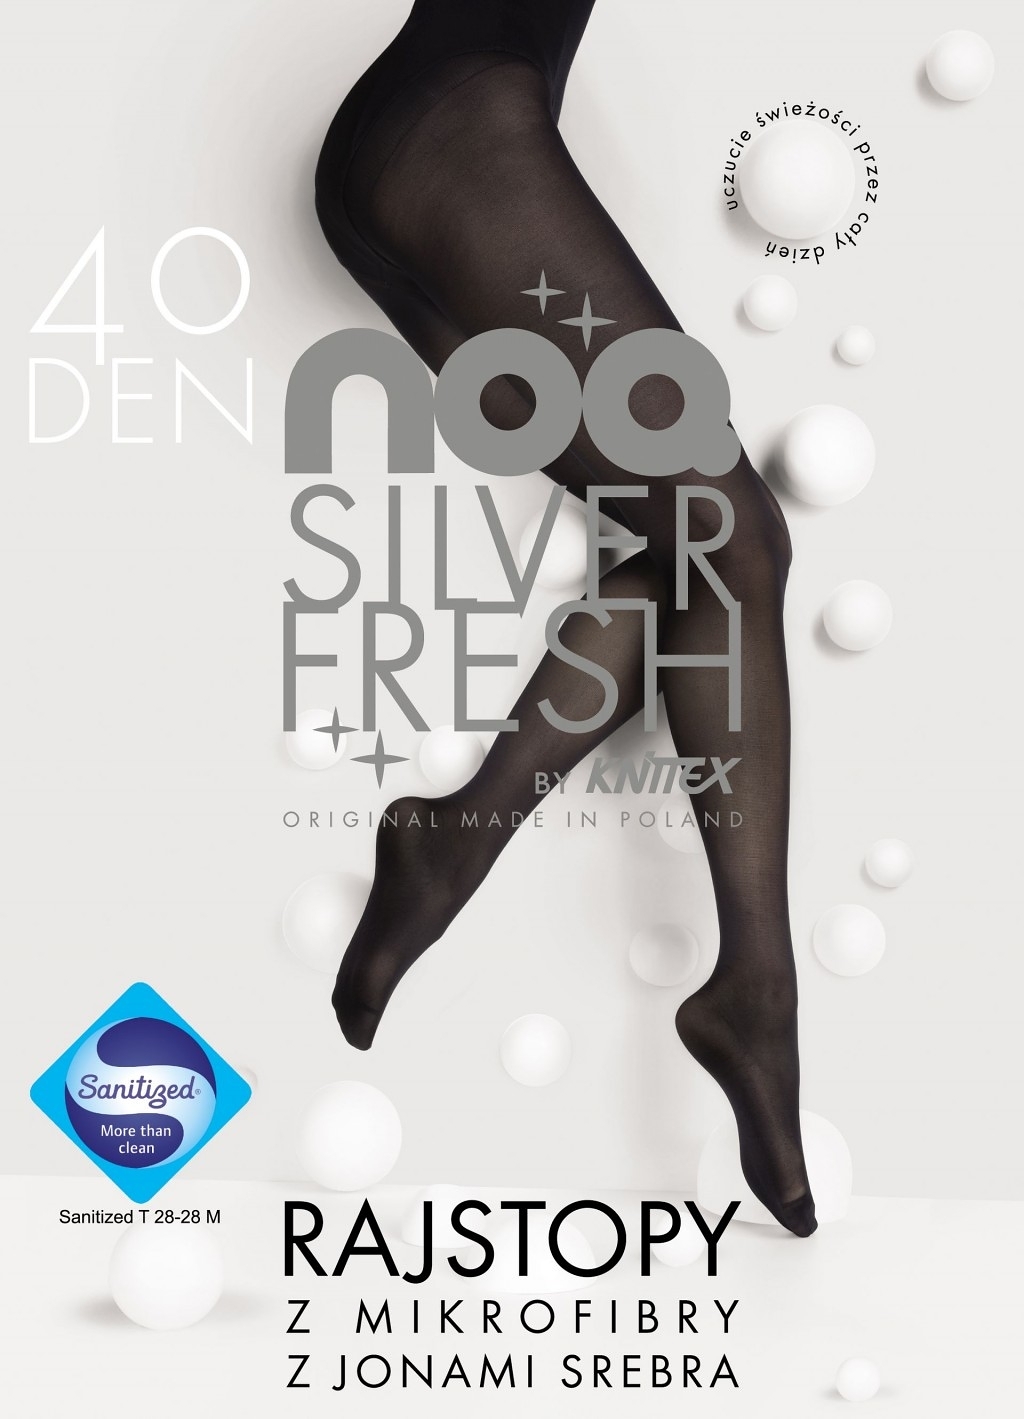 Punčocháče Knittex Noa Silver Fresh 40 den - Nero/3